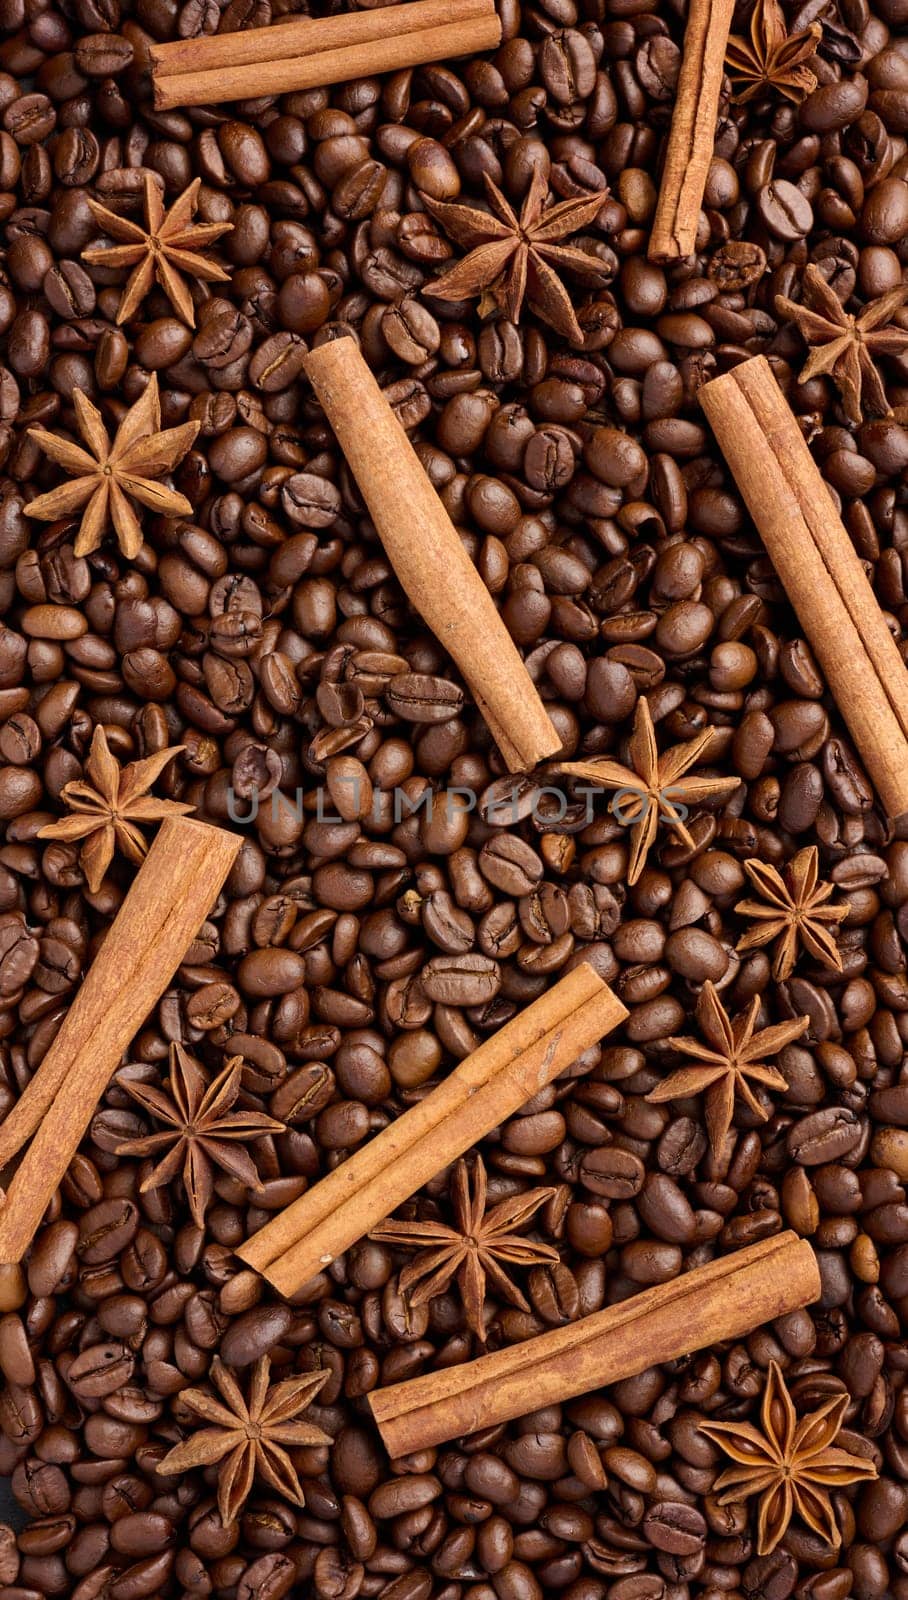 Roasted coffee beans, cinnamon sticks and star anise, full frame